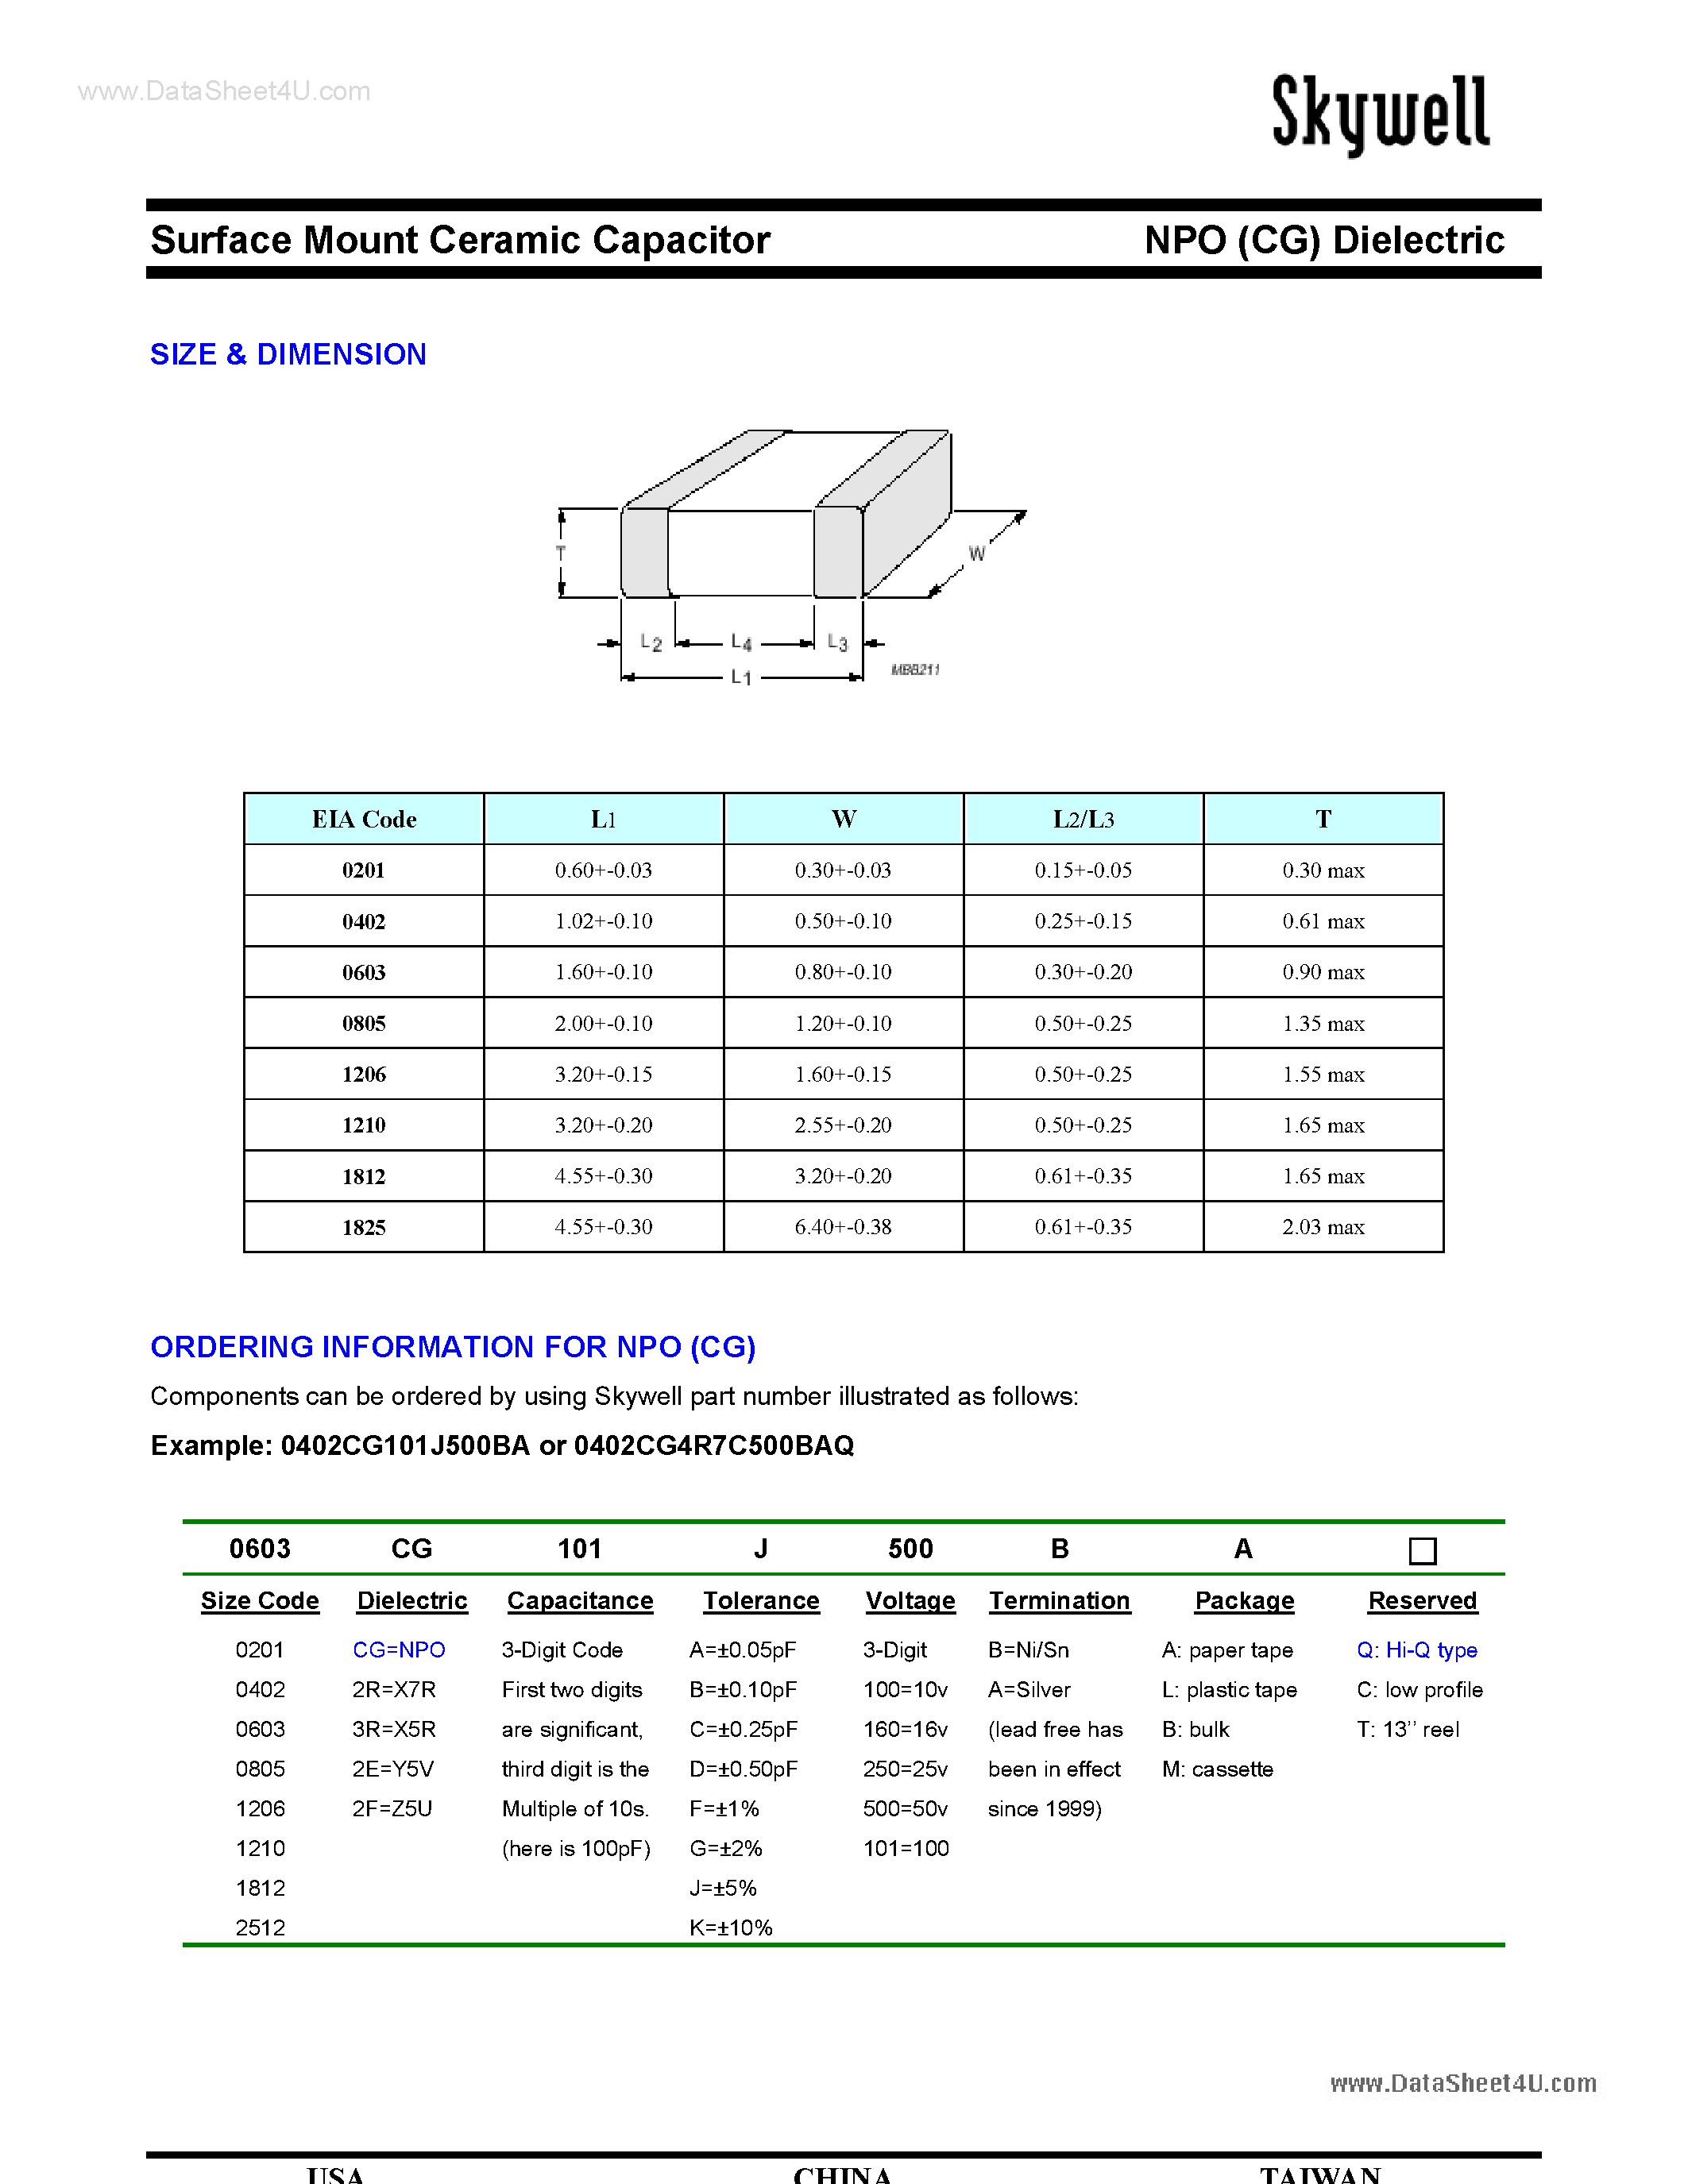 Даташит 04022Exxxx - SUrface Mount Ceramic Capacitor страница 2